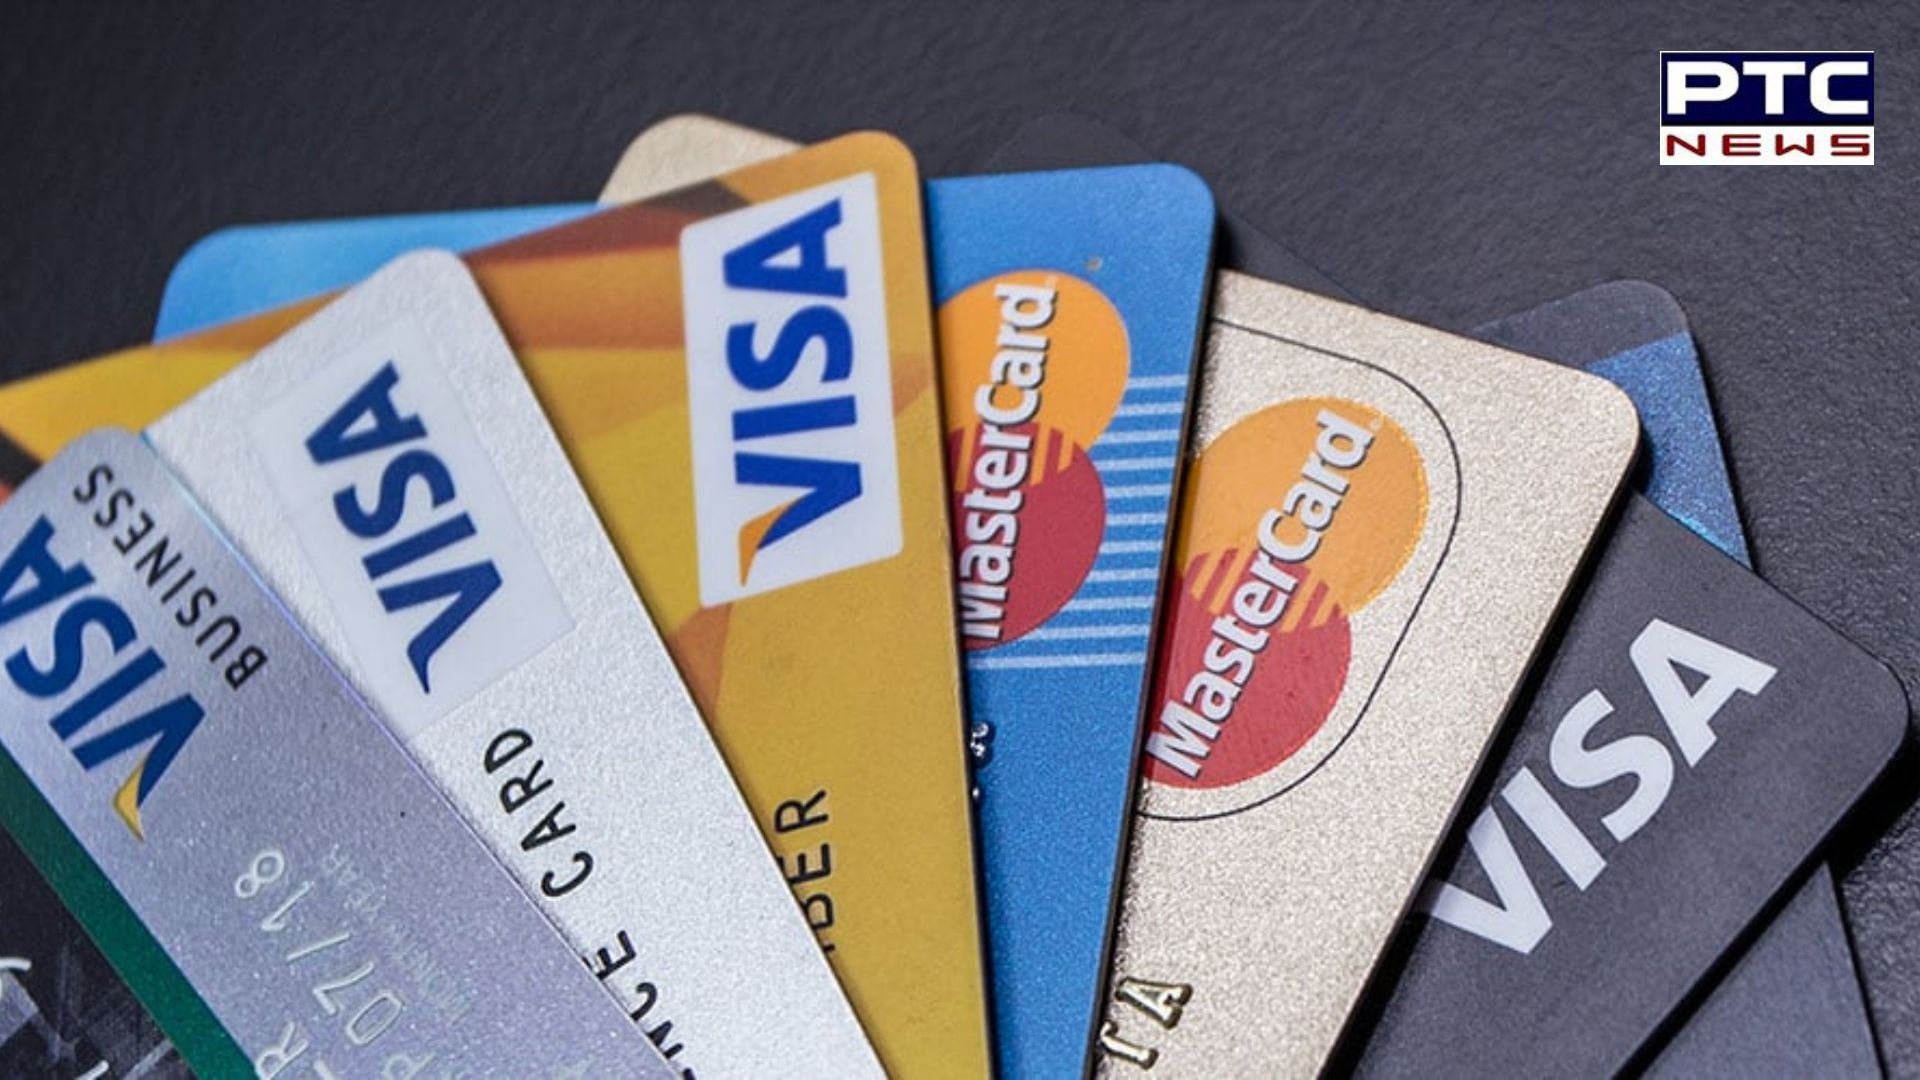 Credit Card ਦੀ ਸੀਮਾ ਵਧਾਉਣ ਦੇ ਕੀ ਫਾਇਦੇ ਹੁੰਦੇ ਹਨ, ਜਾਣੋ ਇੱਥੇ